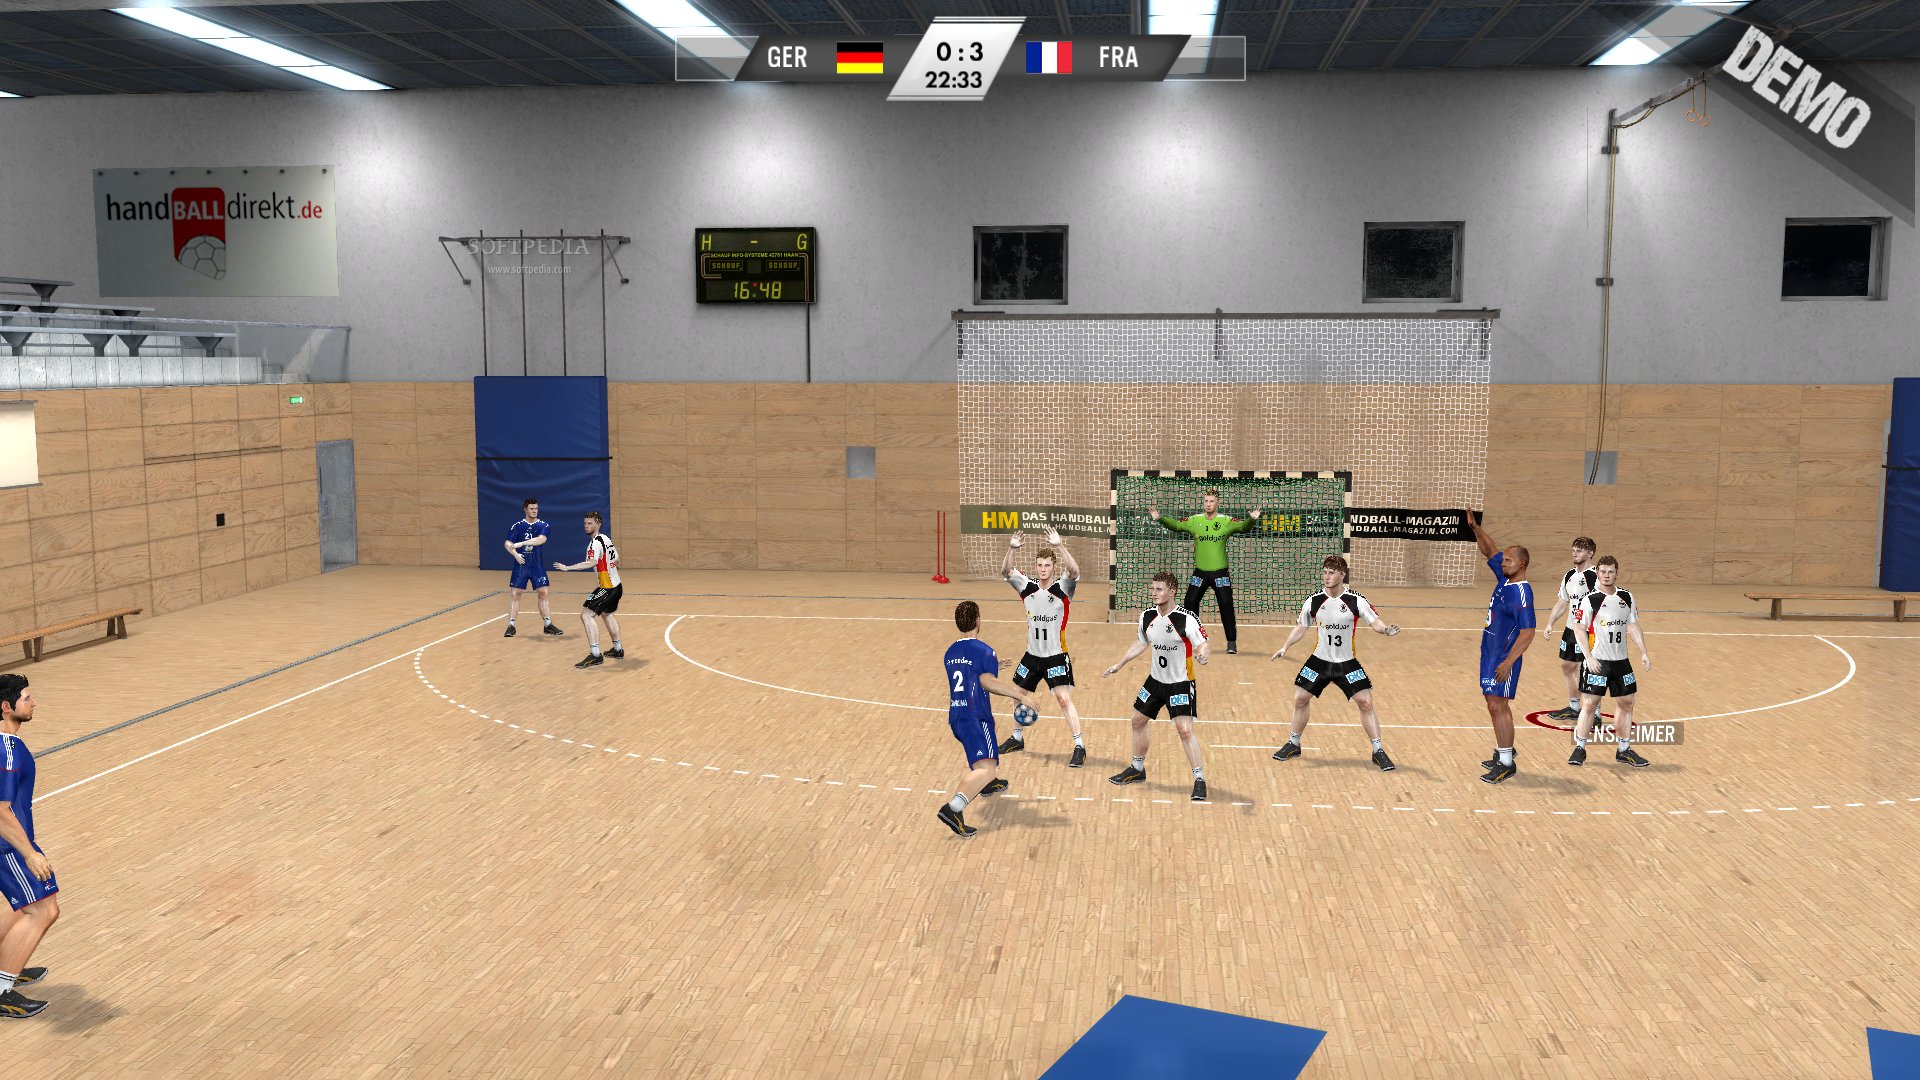 Handball challenge 2011 download torrent softonic descargar liga colombiana pes 2013 pc utorrent